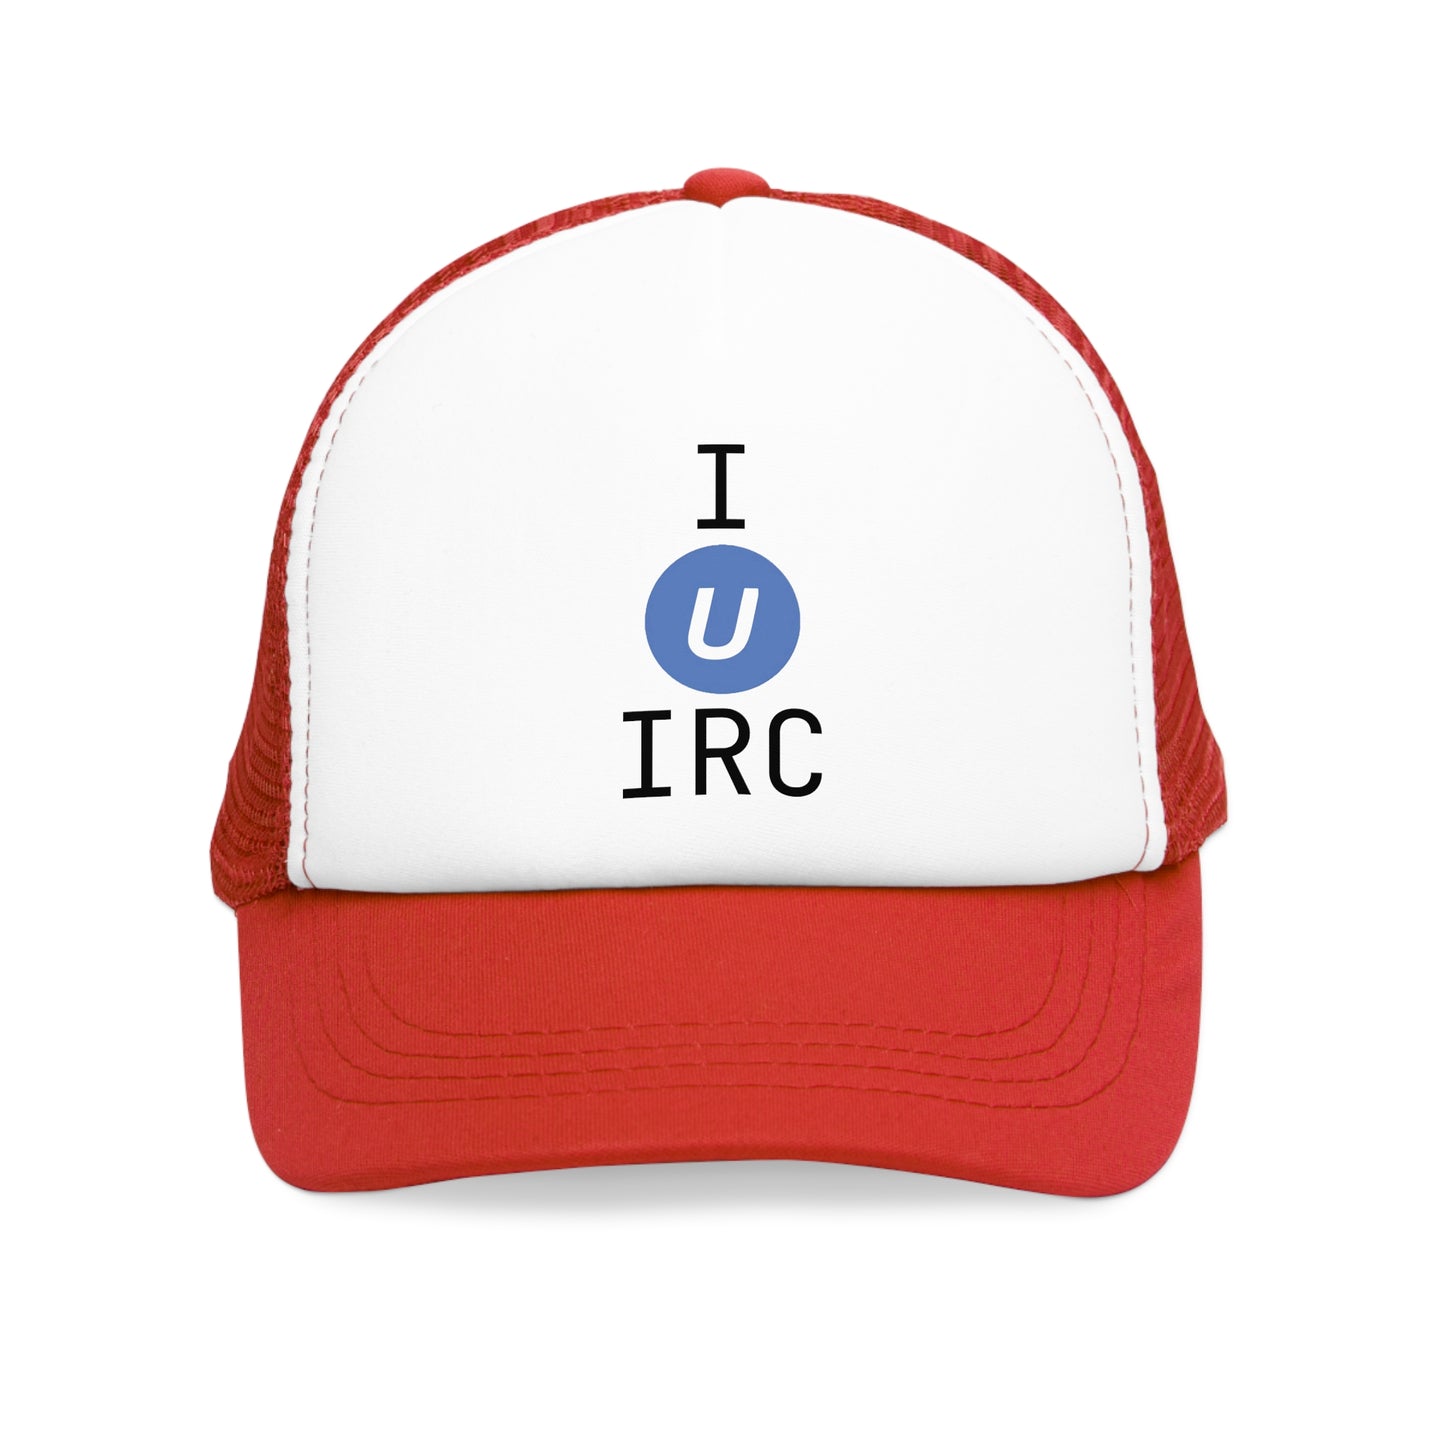 Clothing - I (U) IRC - UnrealIRCd Mesh Cap